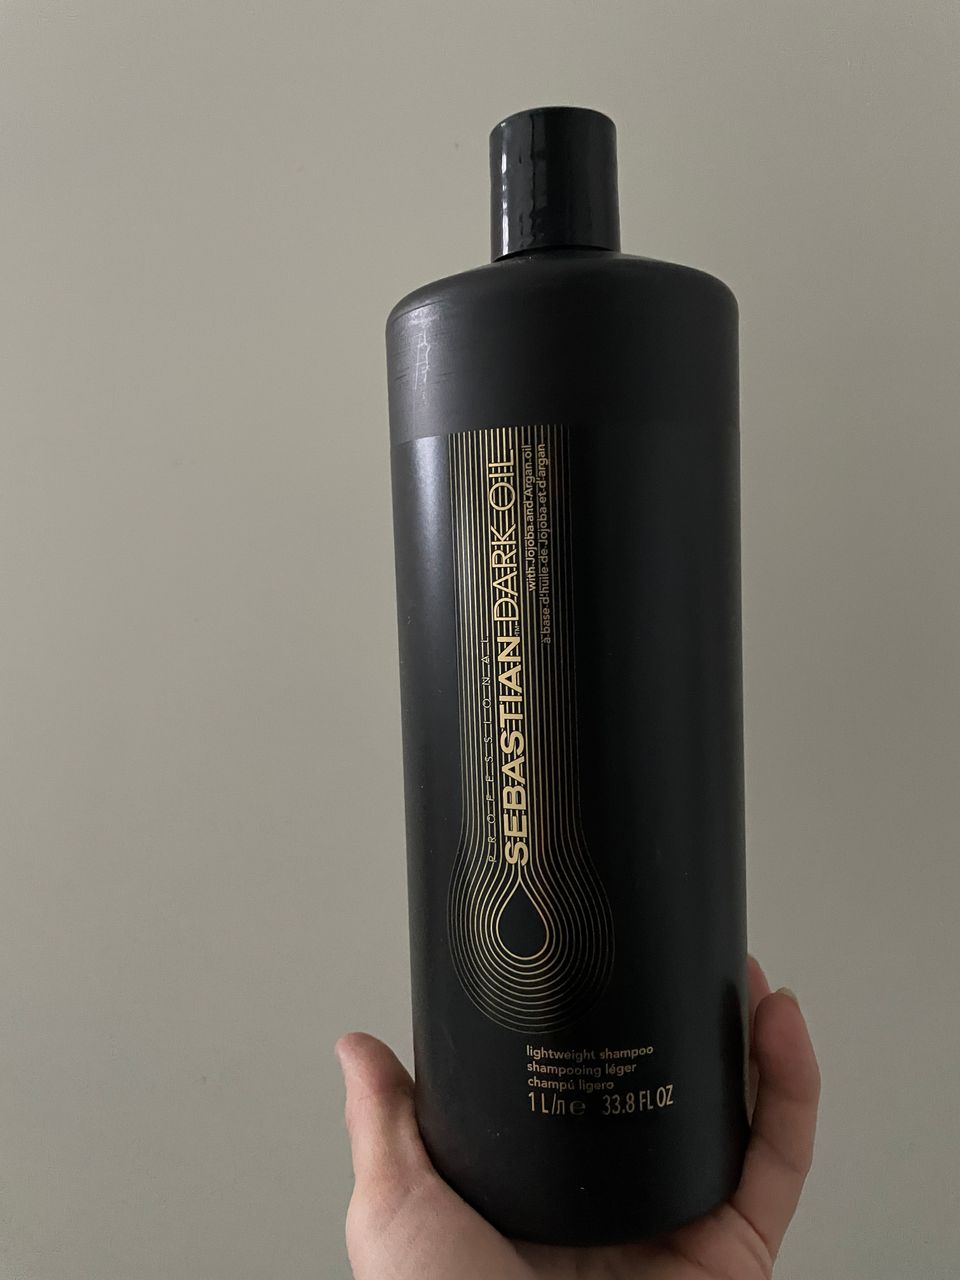 Sebastian professional dark oil lightweight shampoo